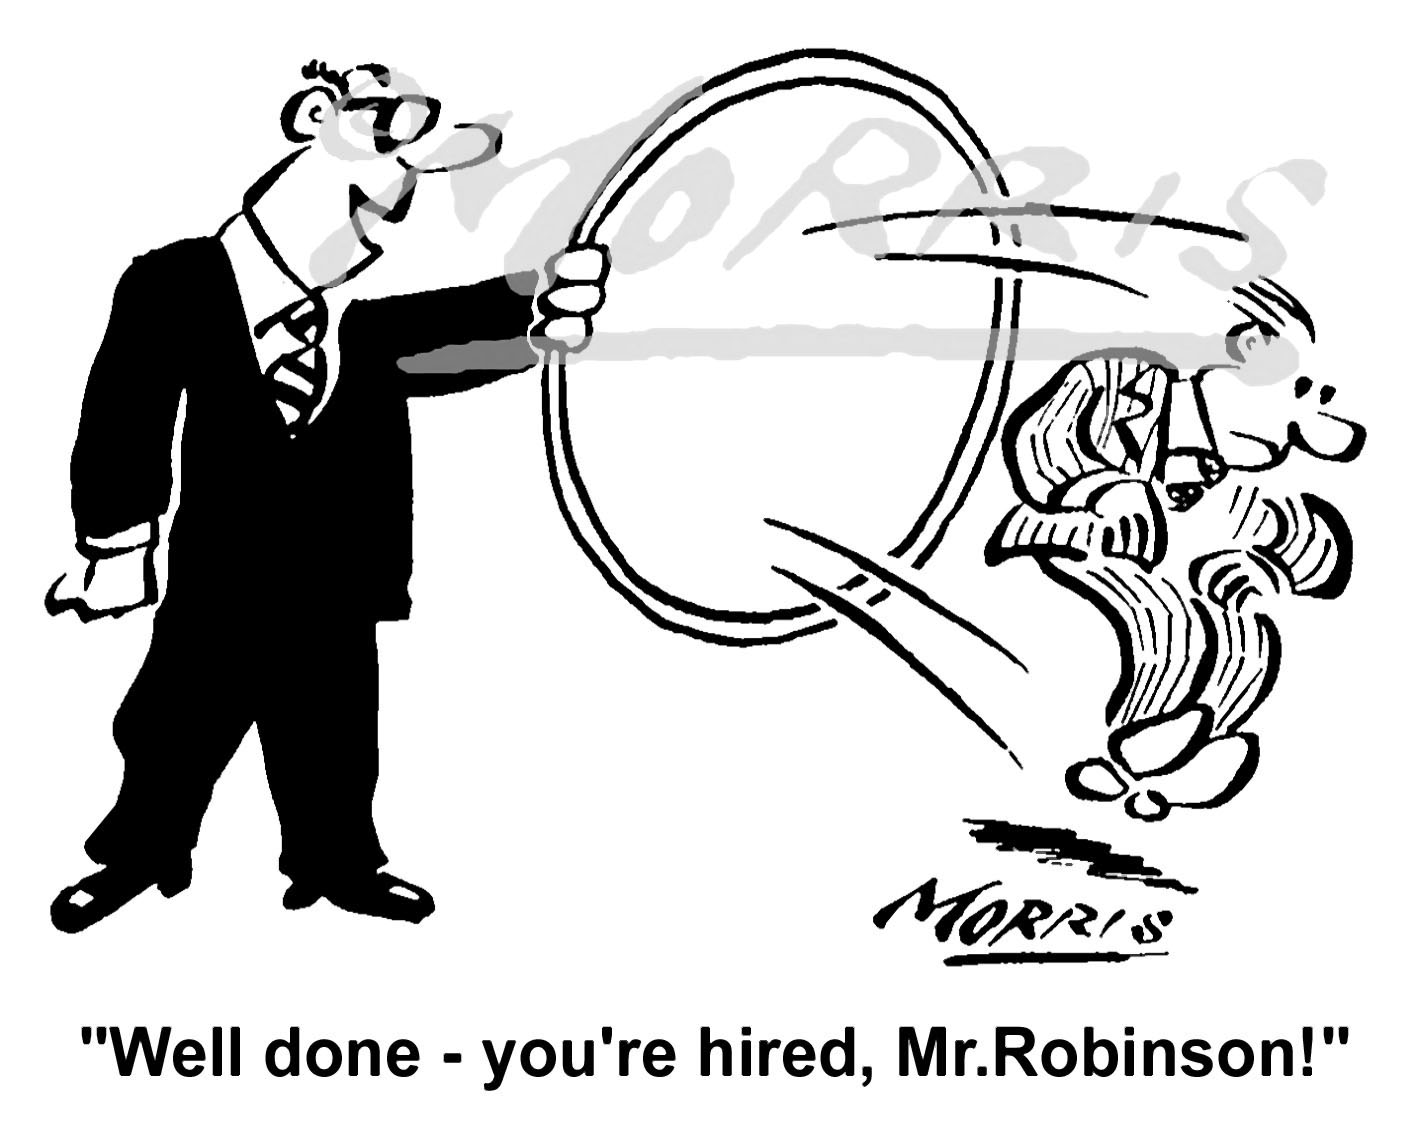 Recruitment cartoon, hiring comic Ref: 2999bw | Business cartoons